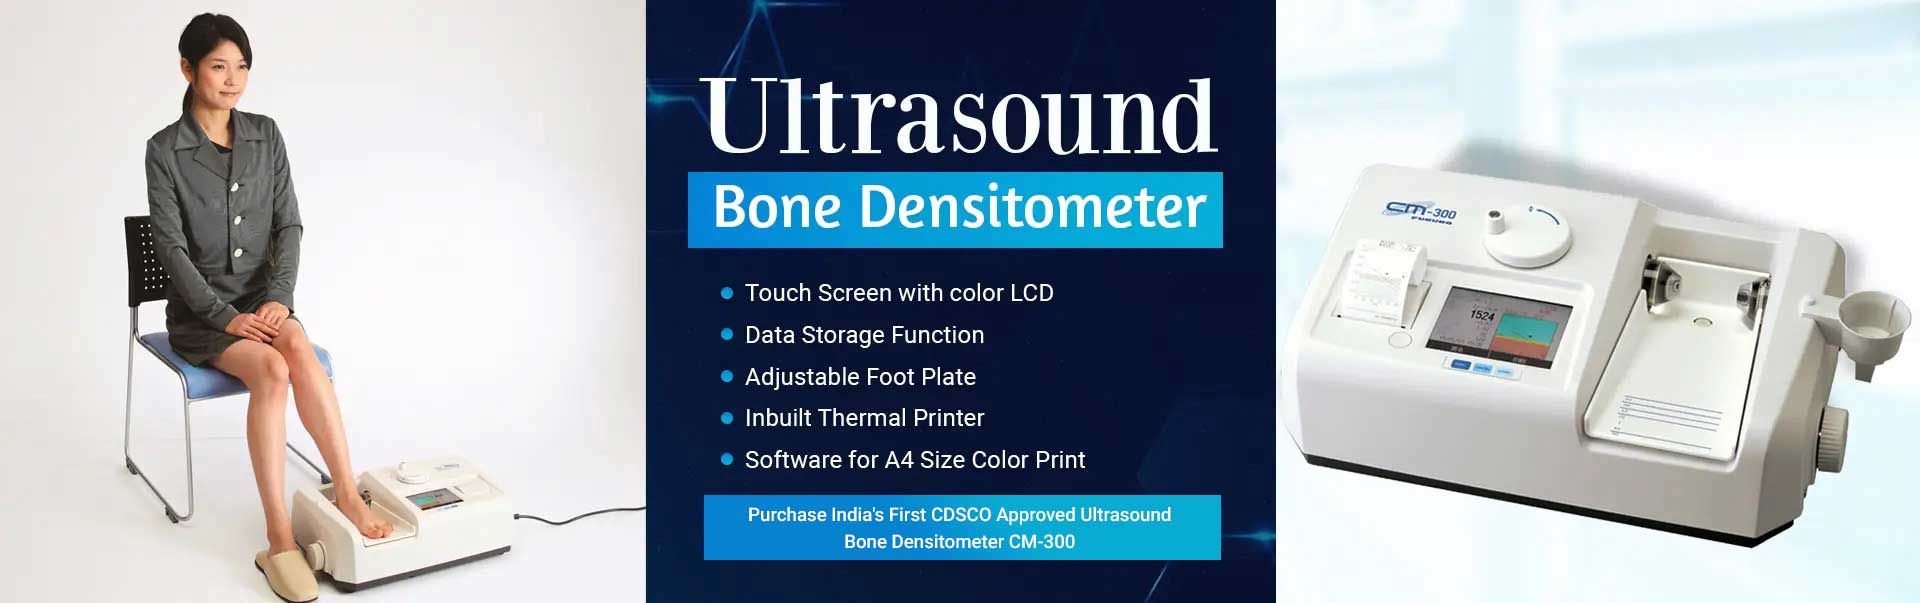 Ultrasound Bone Densitometer Manufacturers in Jhansi